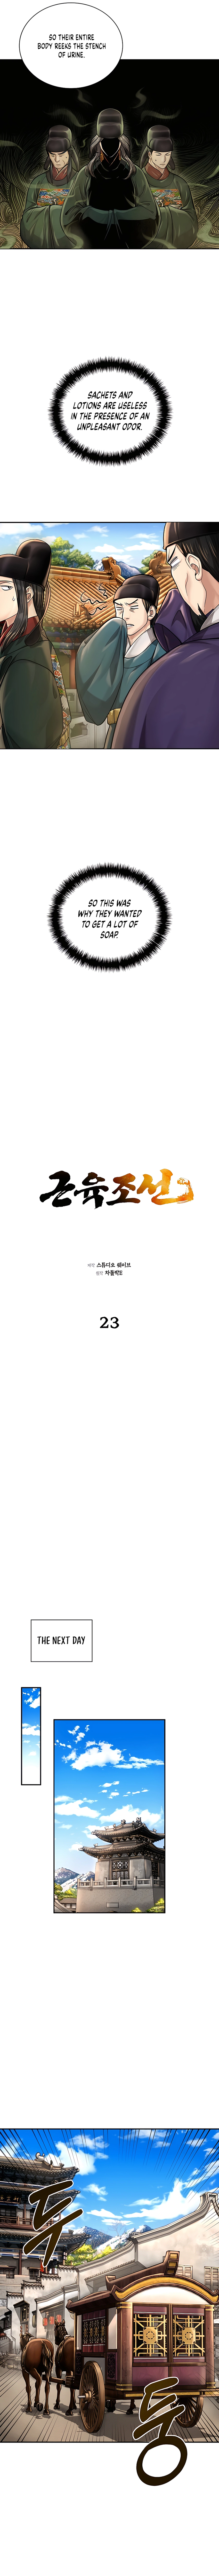 Muscle Joseon, Chapter 23 image 03